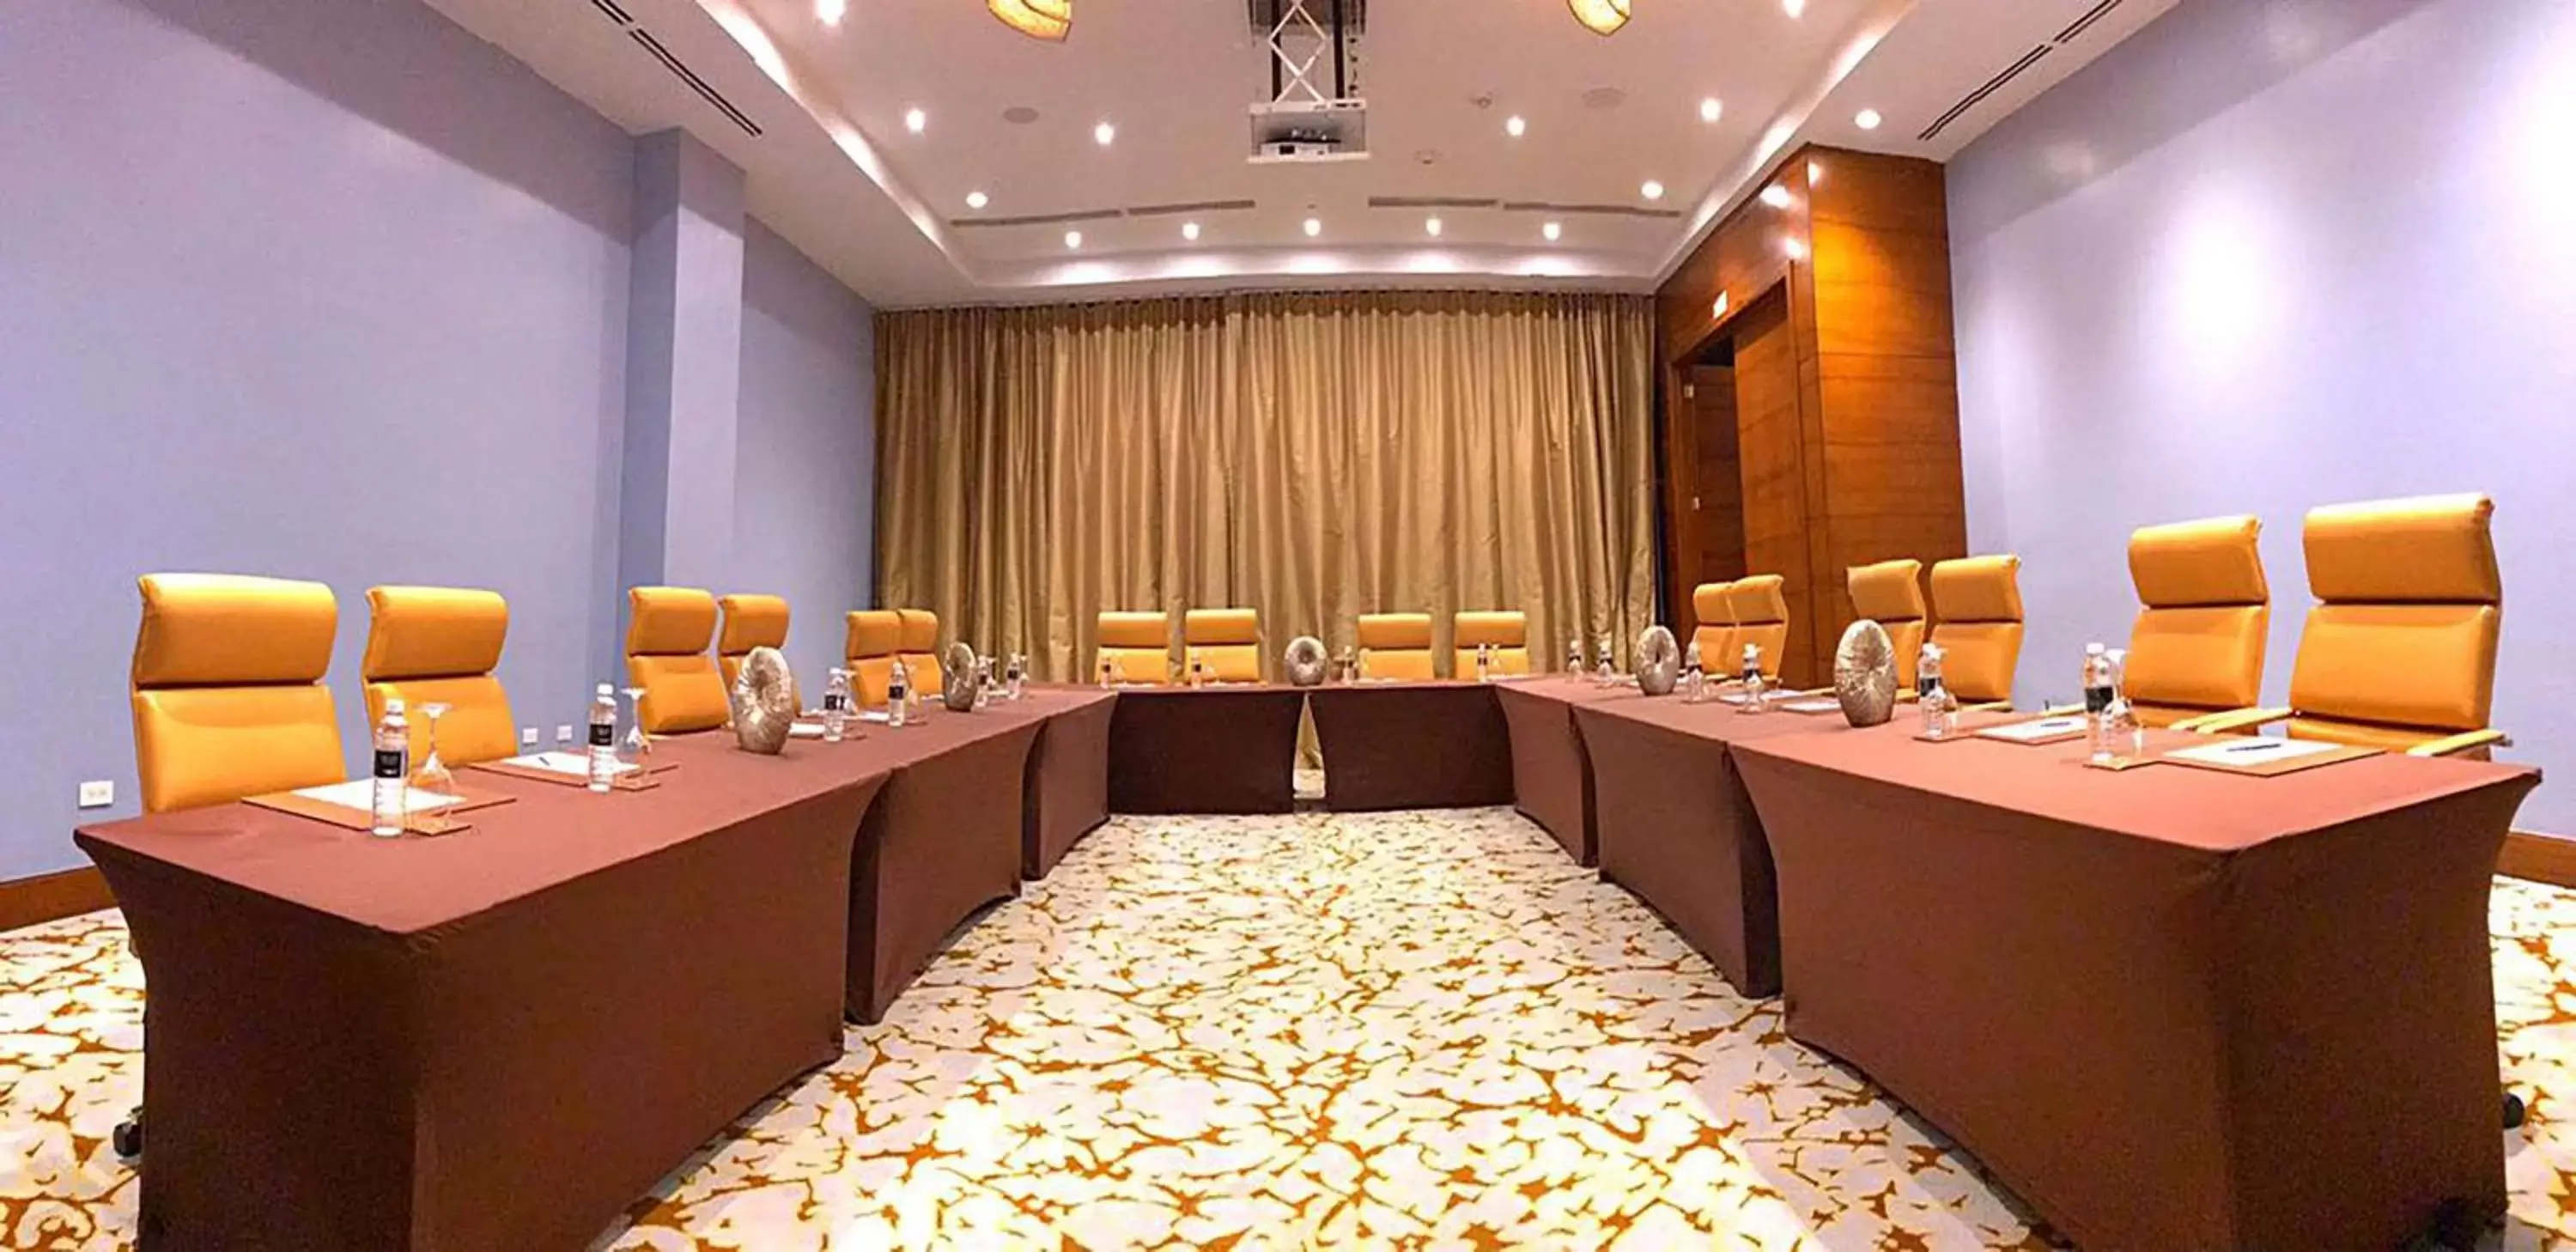 Meeting/conference room in Waldorf Astoria Panama